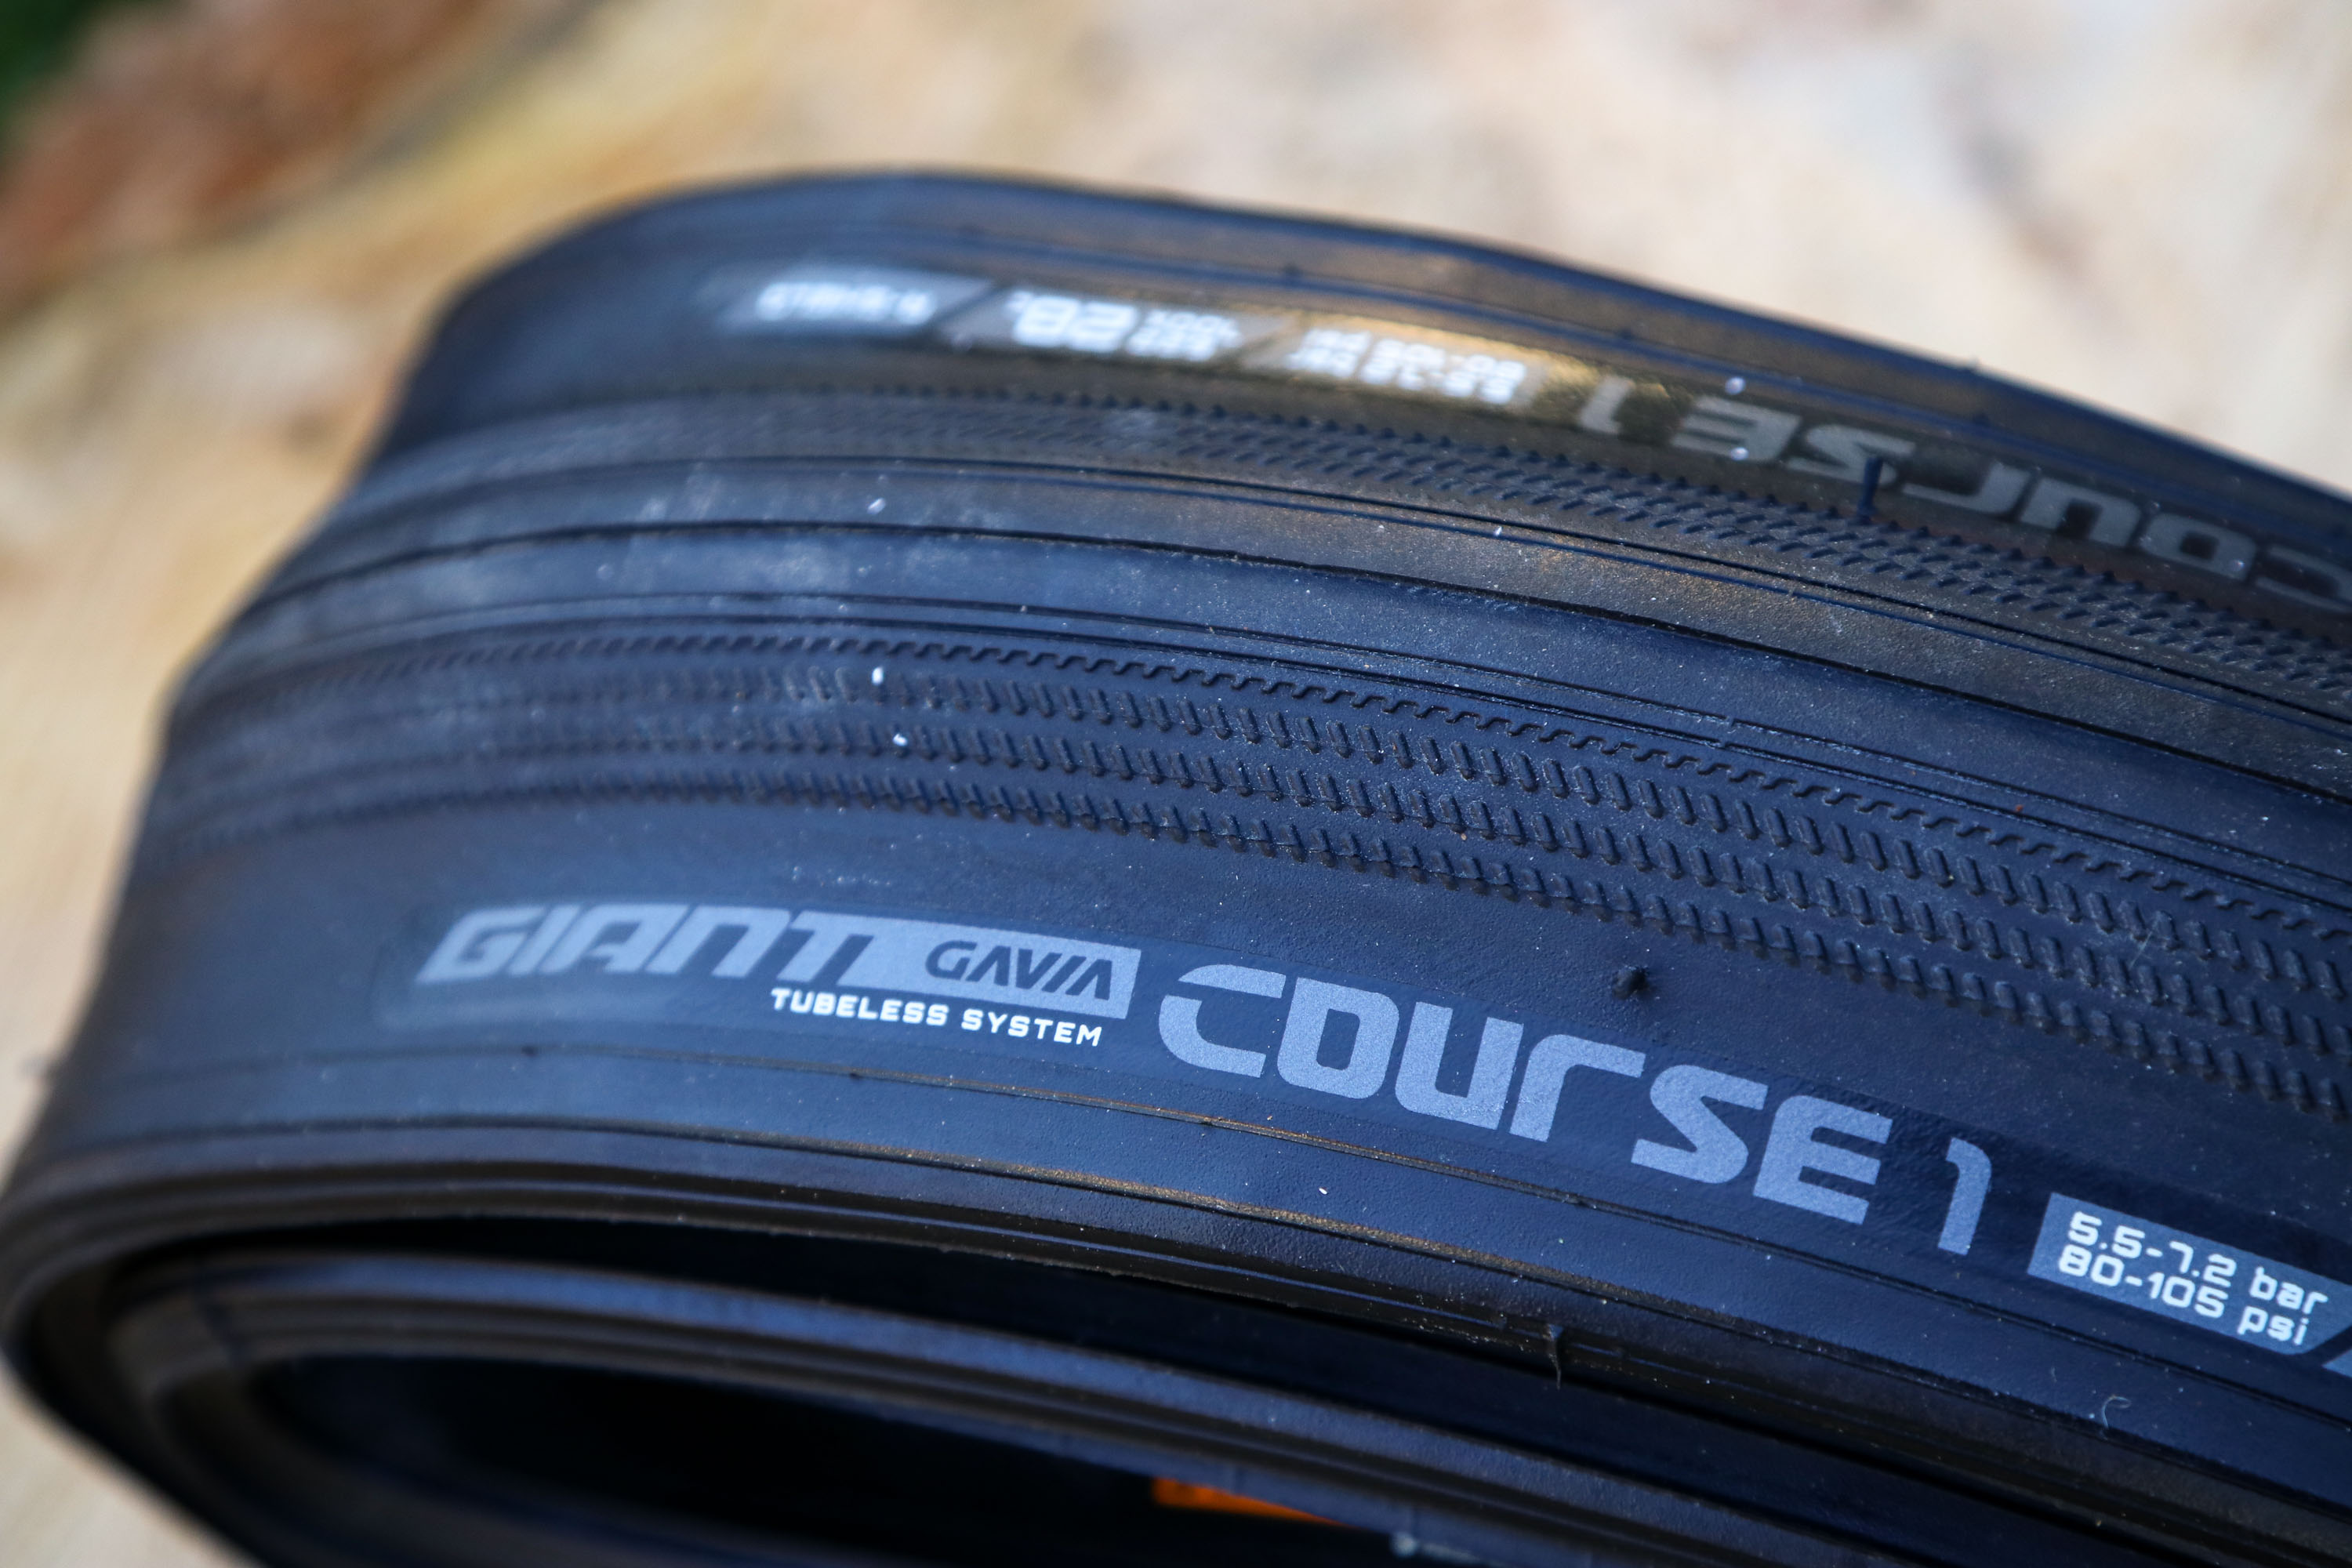 Giant Gavia Course 1 tubeless tyre | road.cc